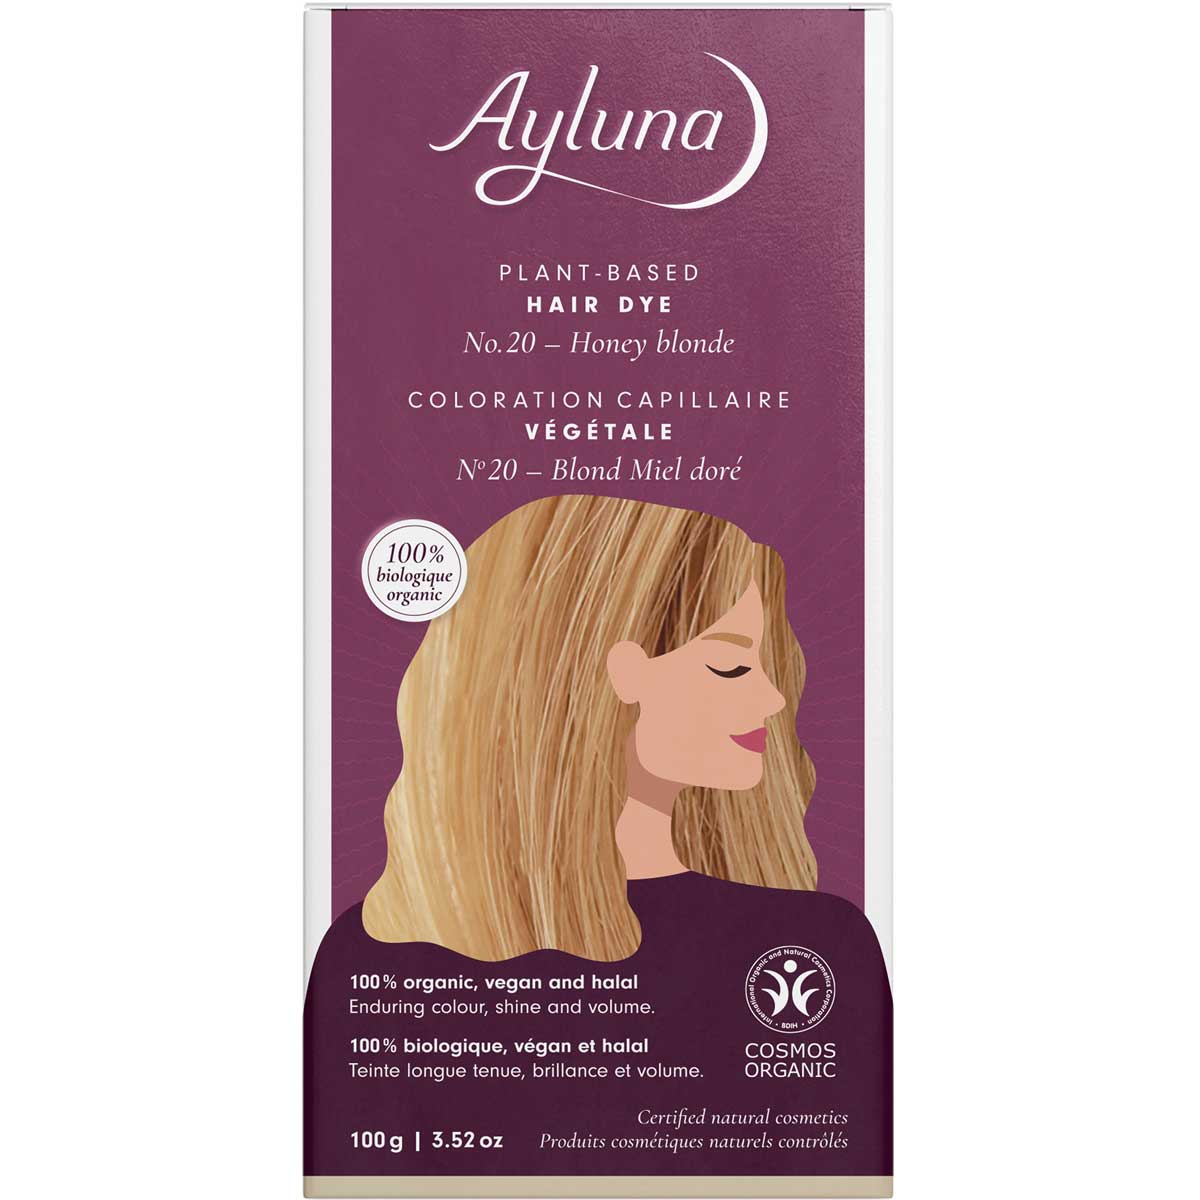 Ayluna Honey Blonde No.20 Plant-Based Hair Dye100g